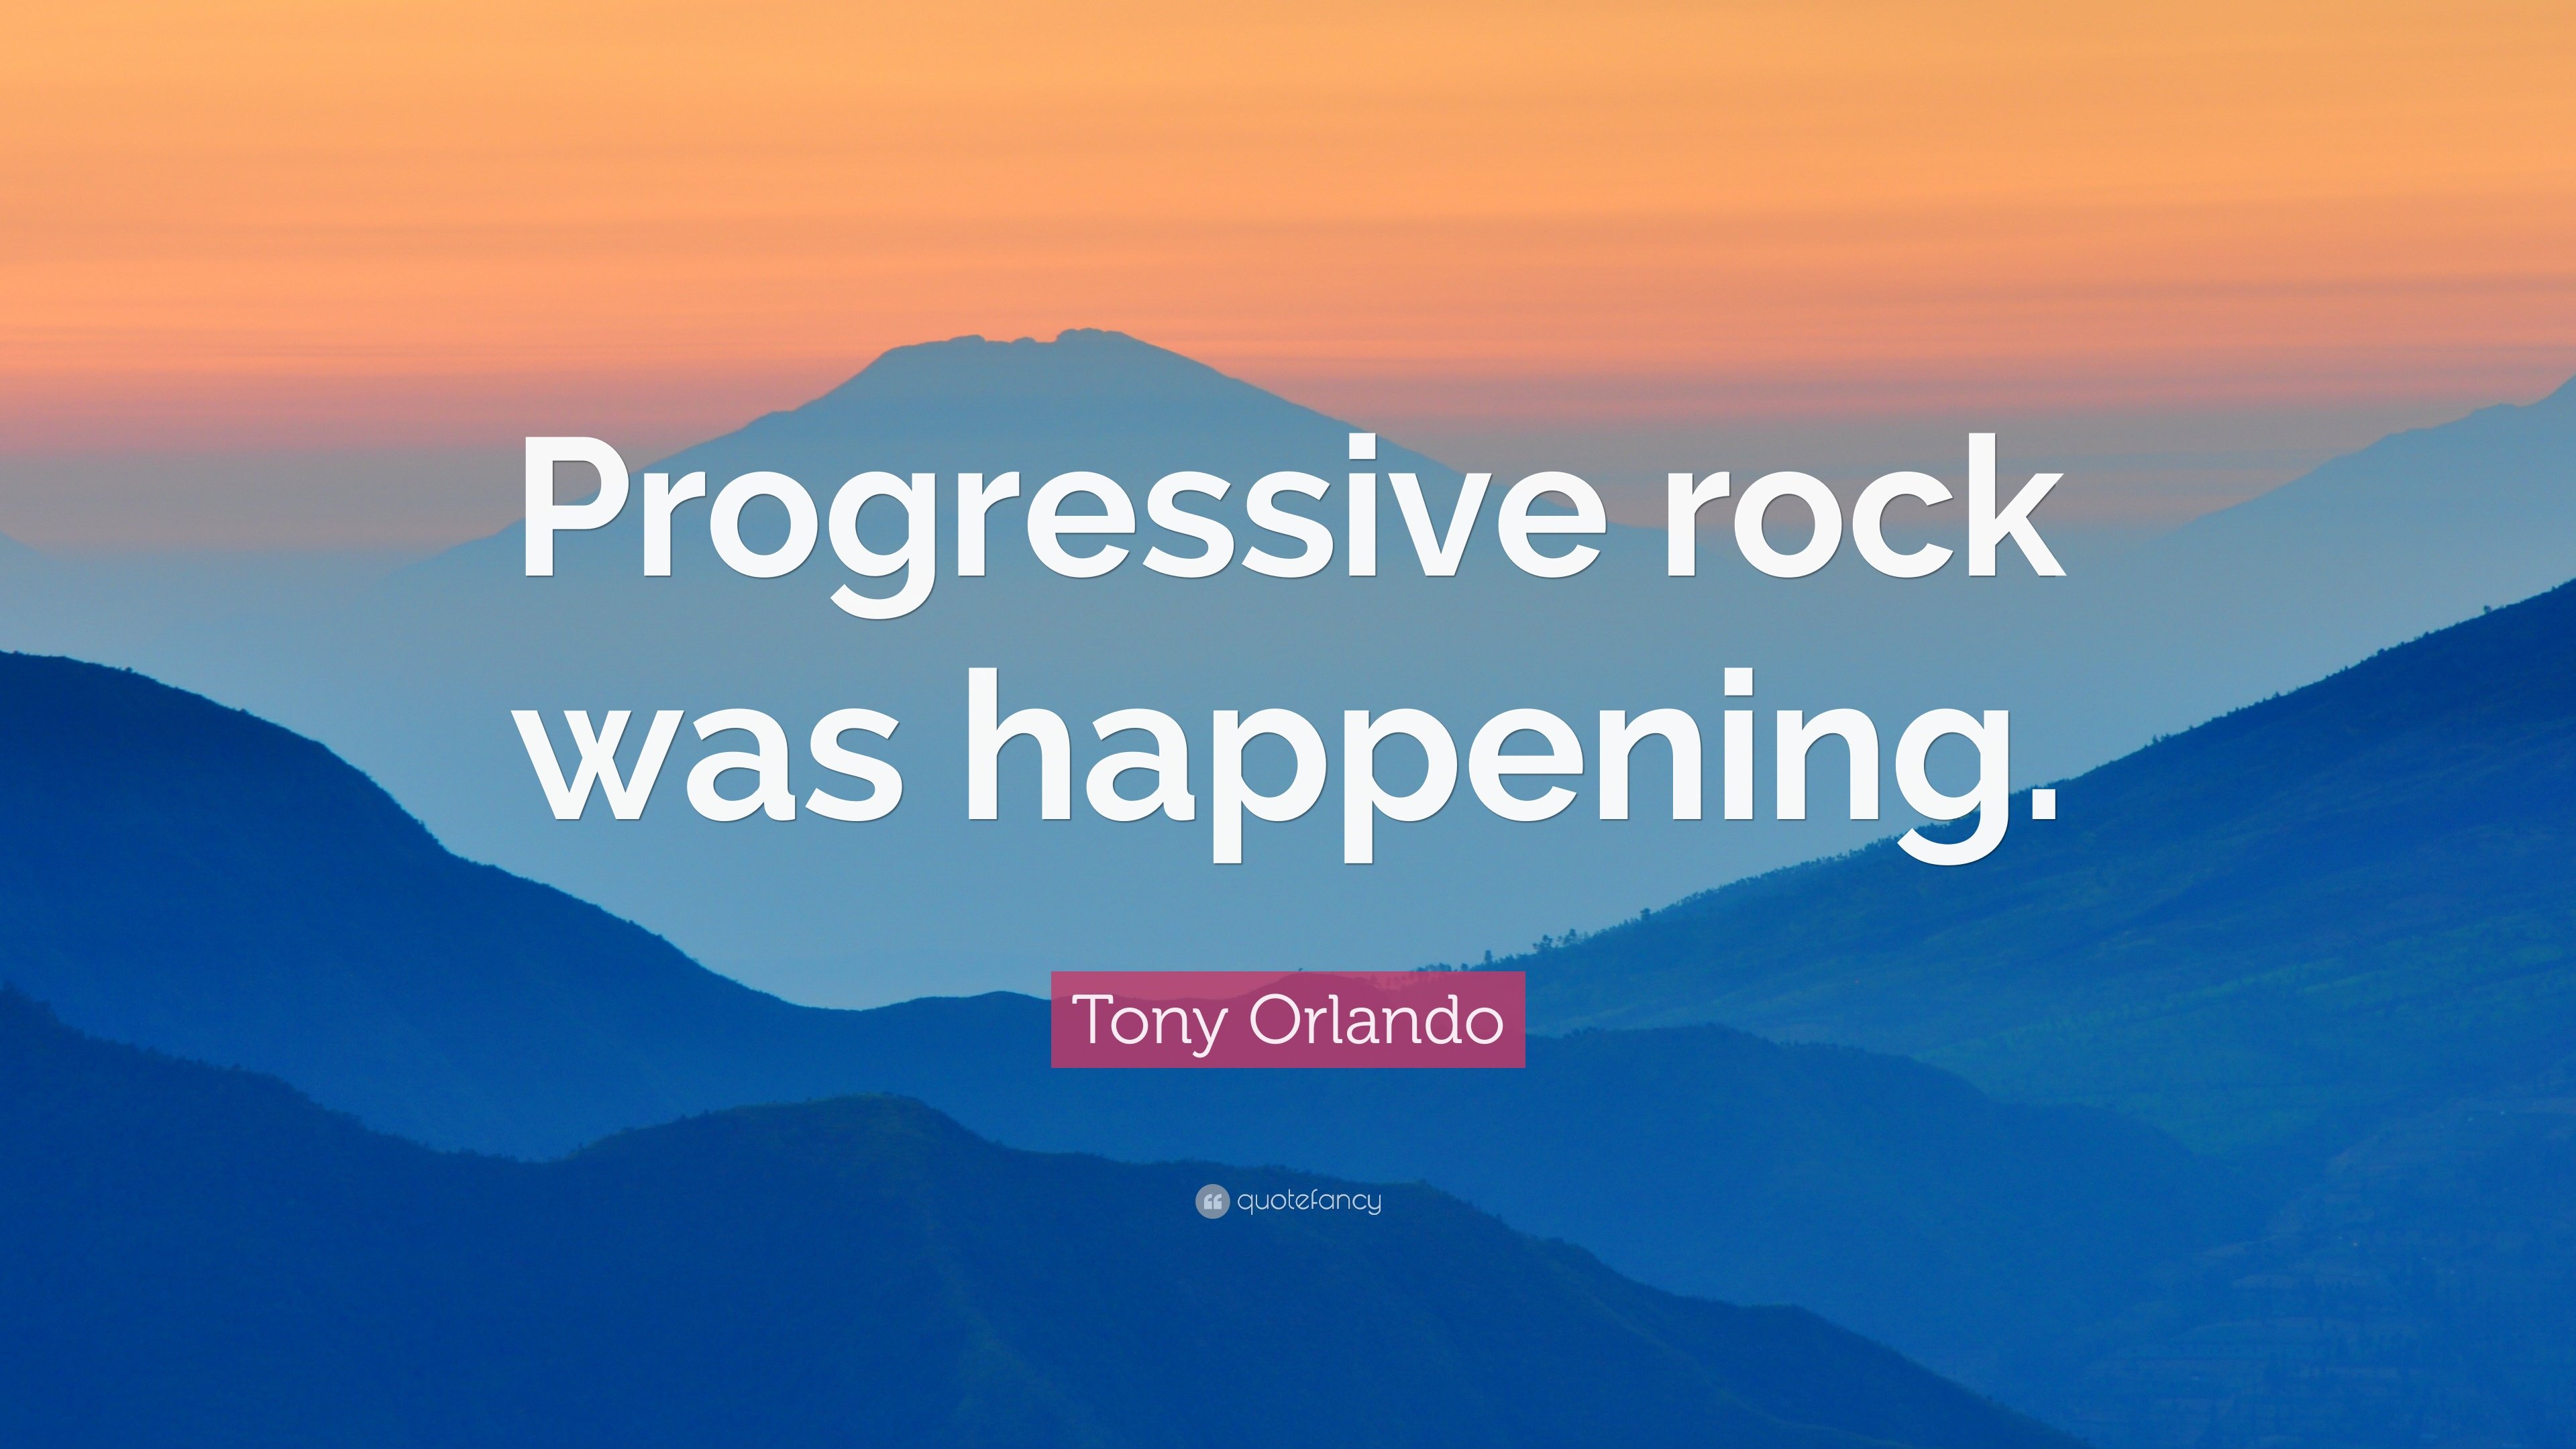 Tony Orlando Quote: “Progressive rock was happening.” 10 wallpaper